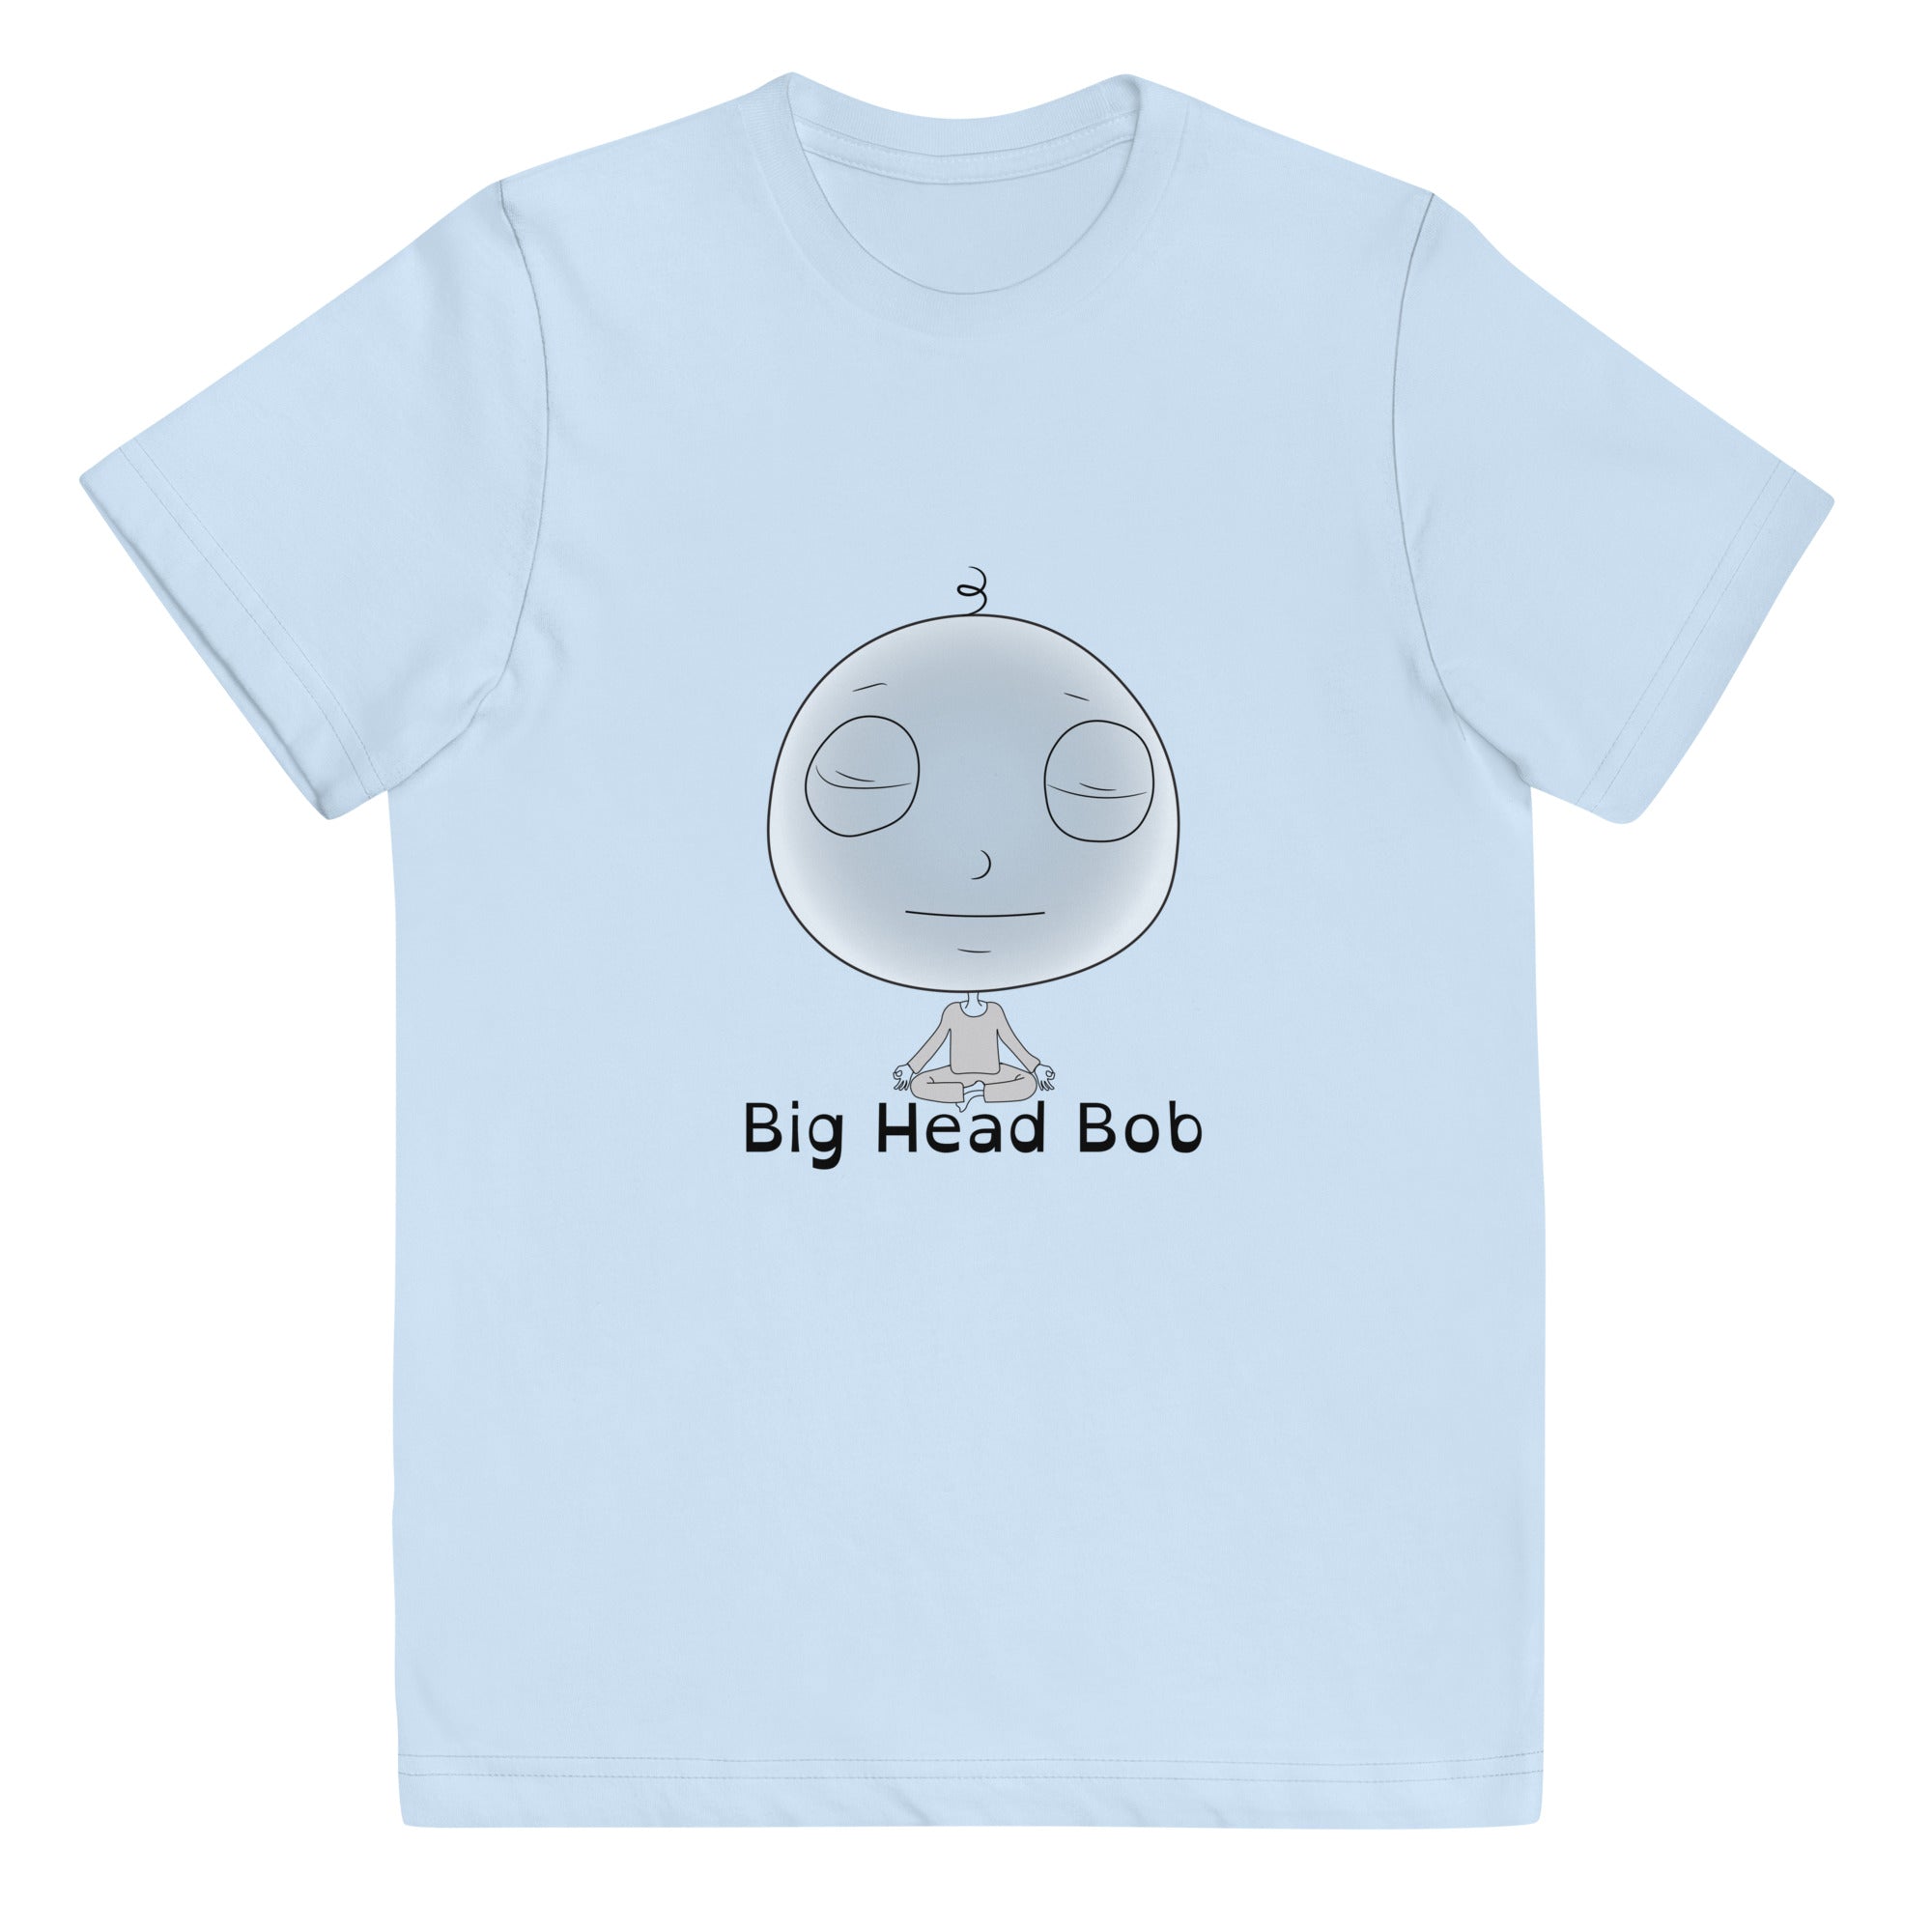 Mediation Bob Youth jersey t-shirt